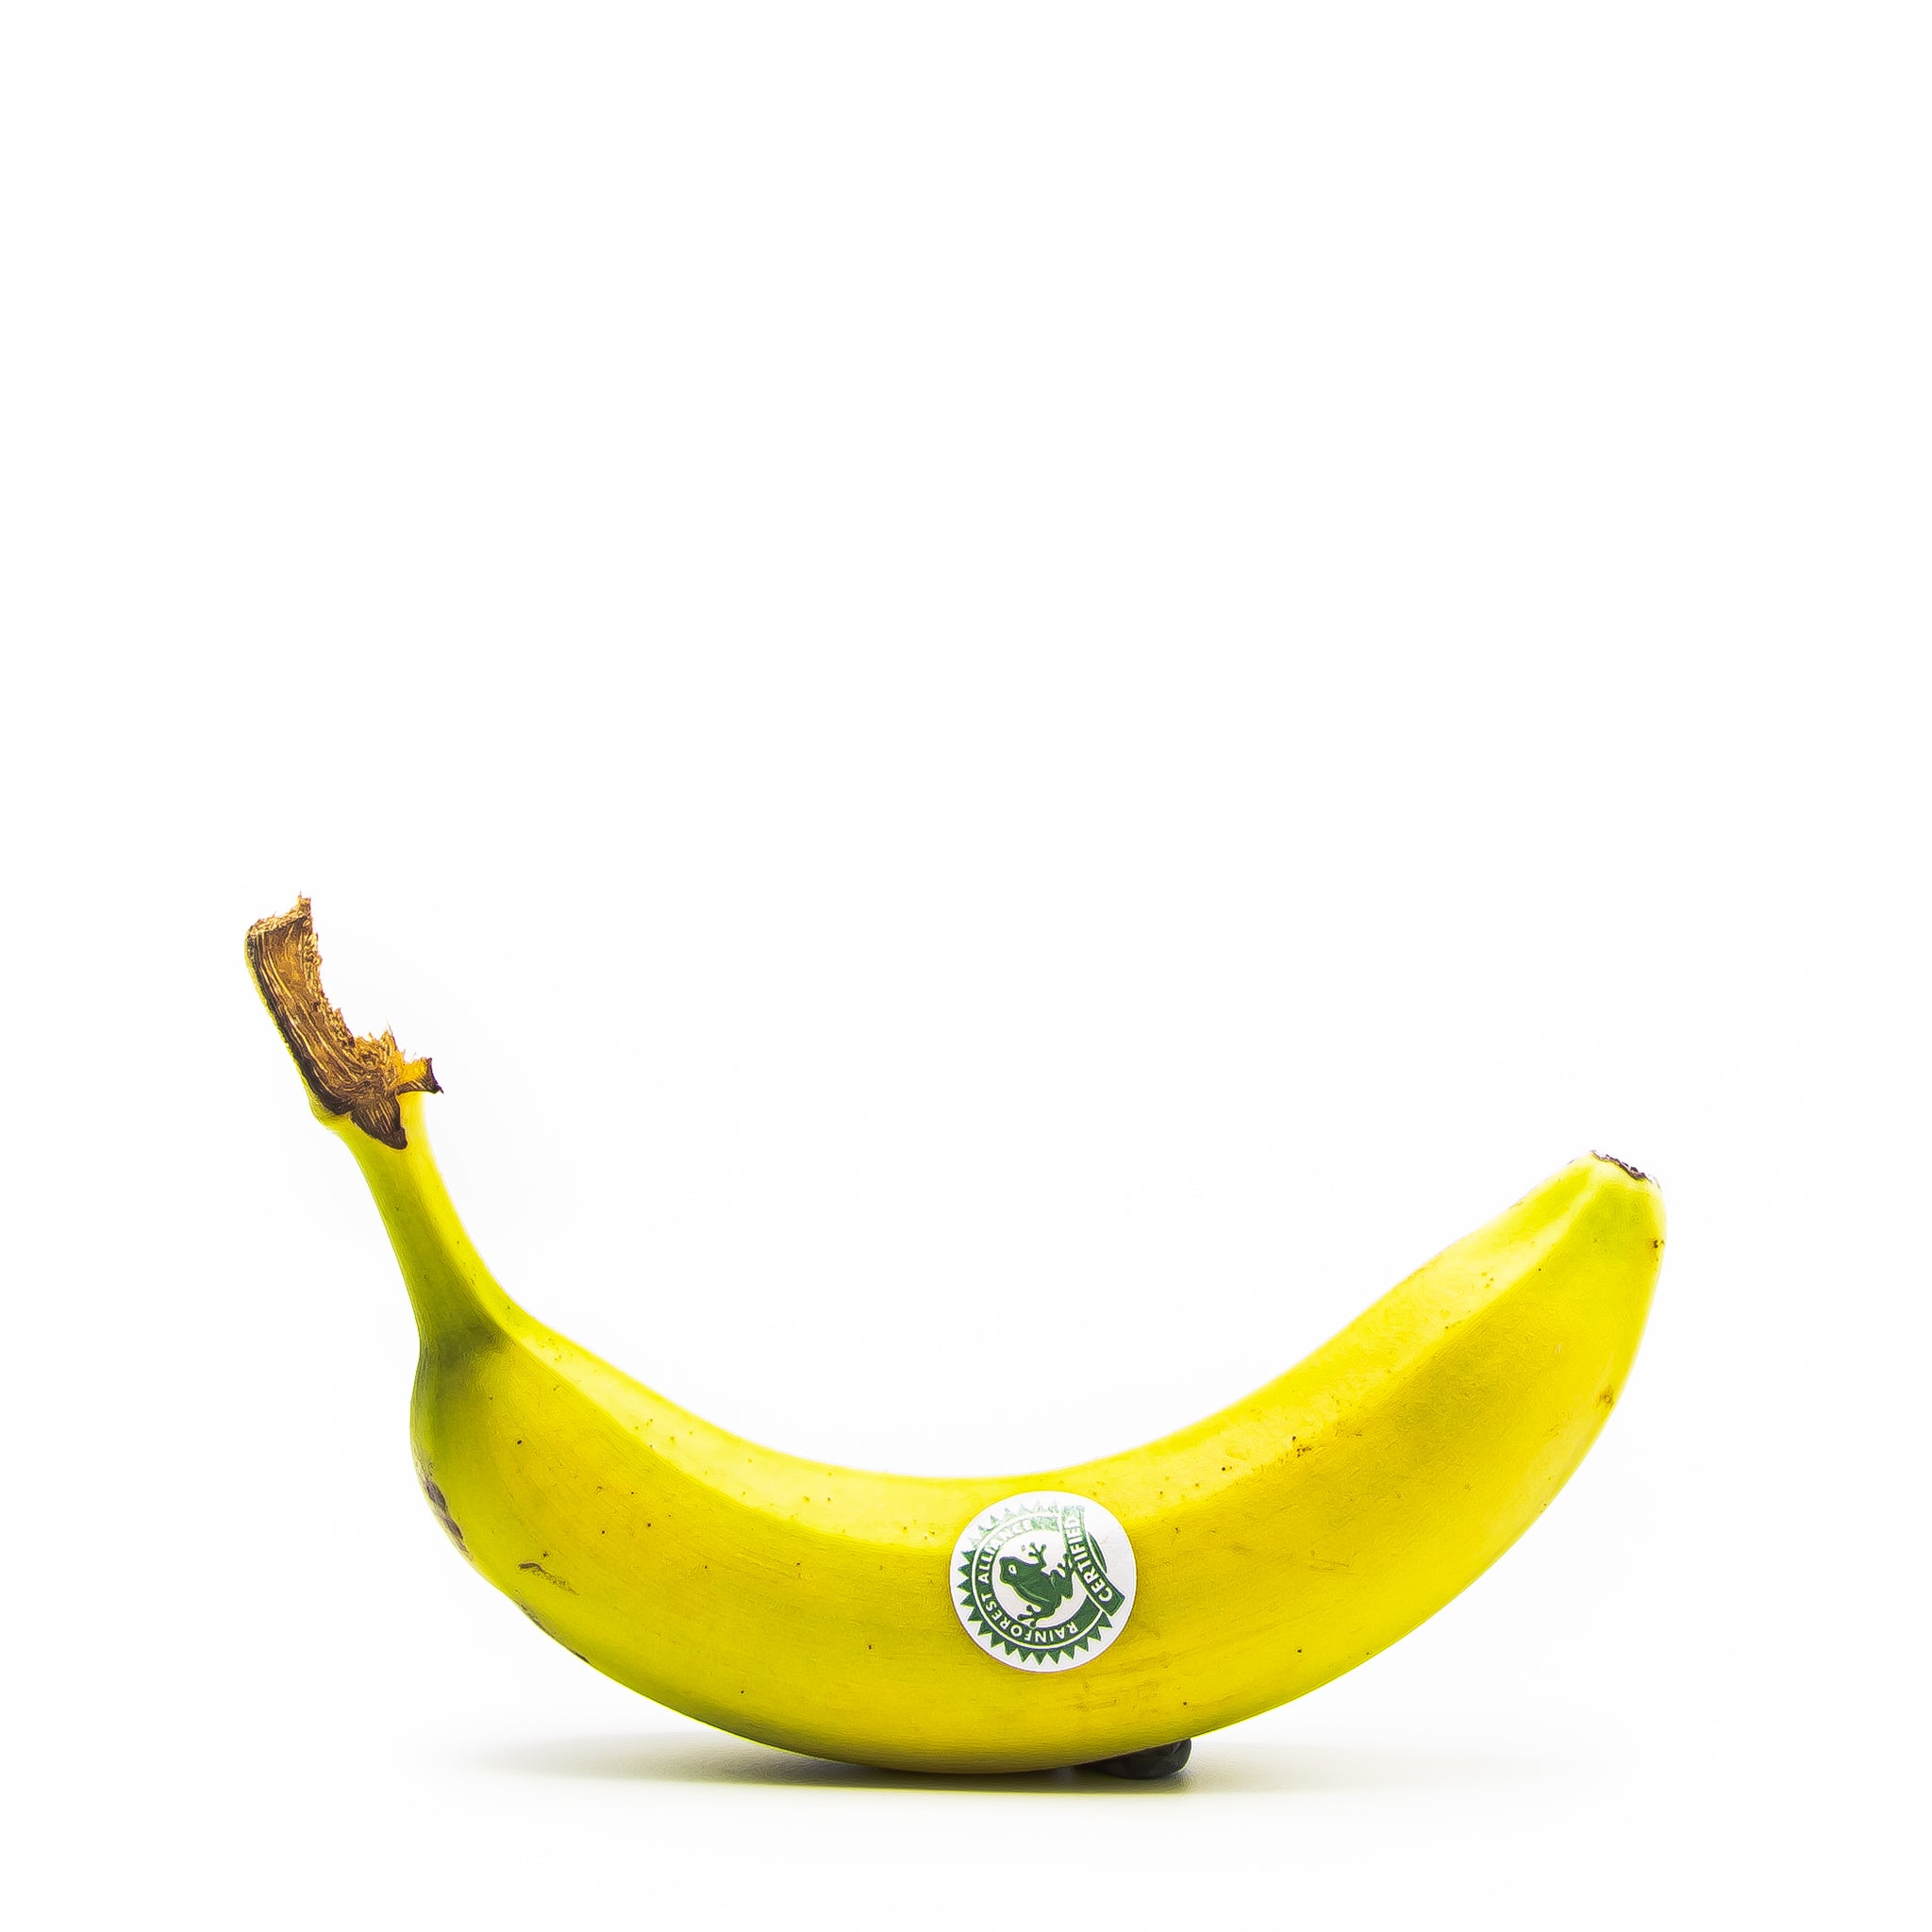 Bananen per stuk